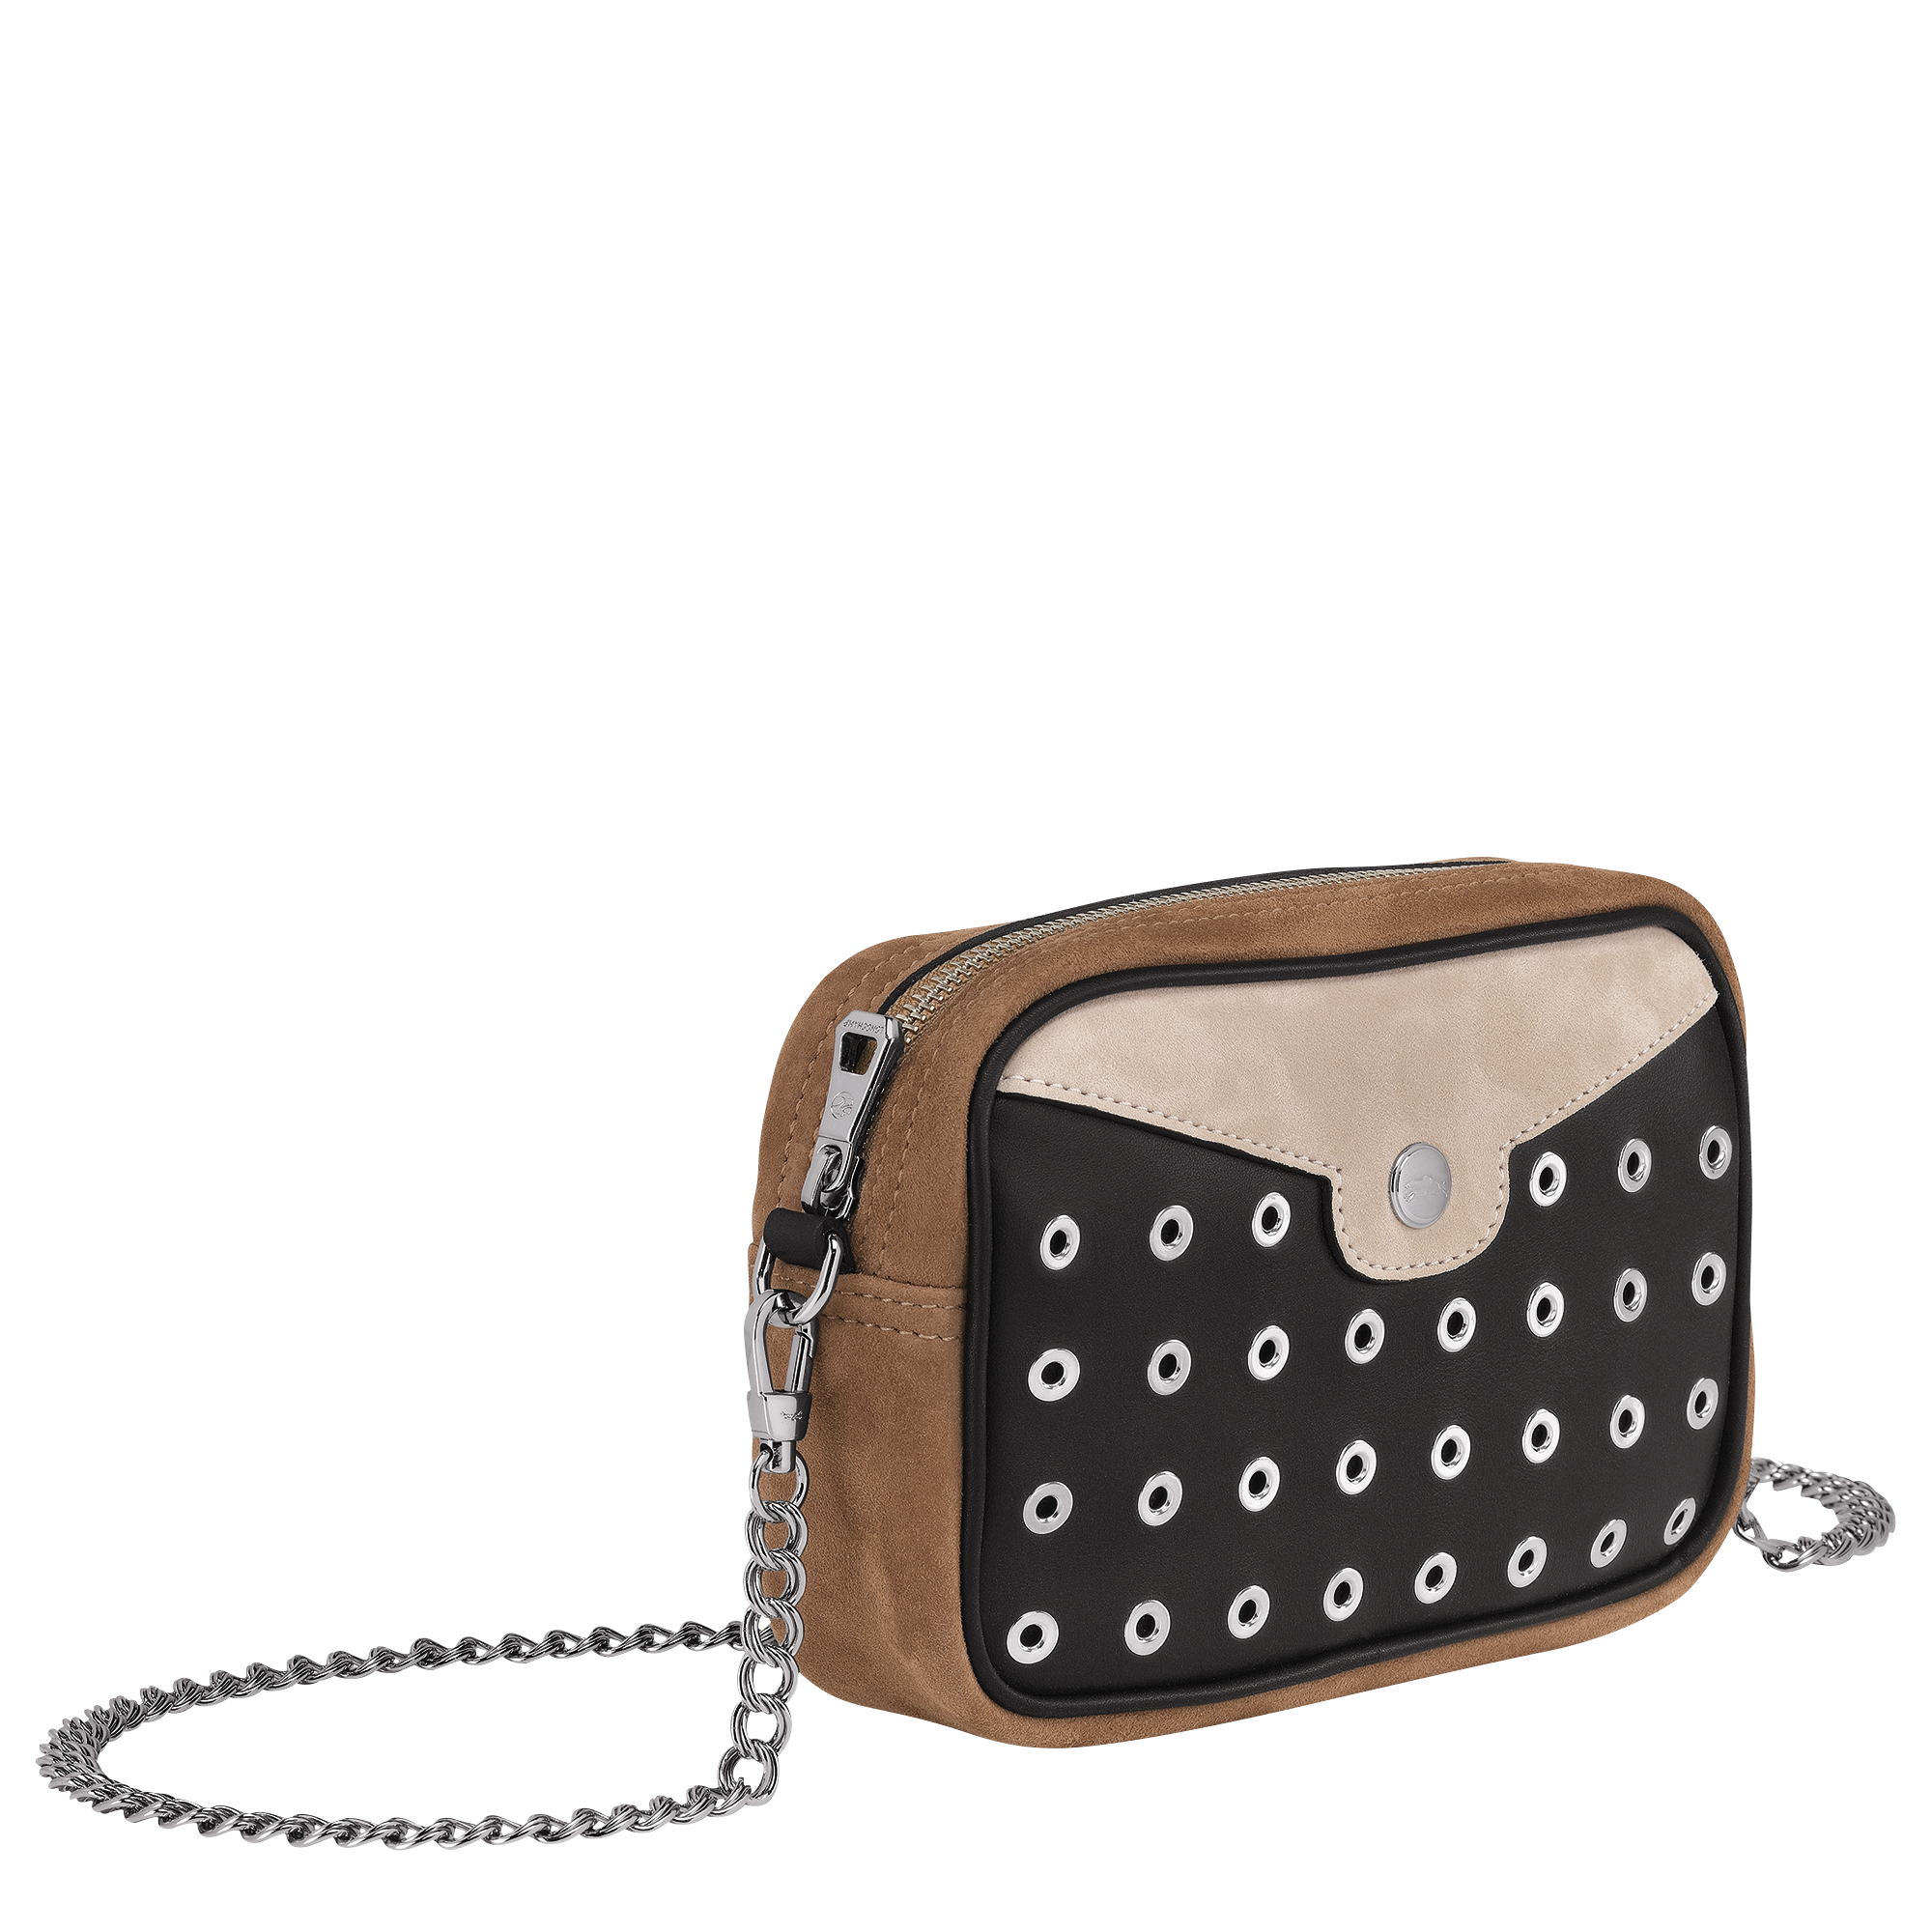 longchamp polka dot bag